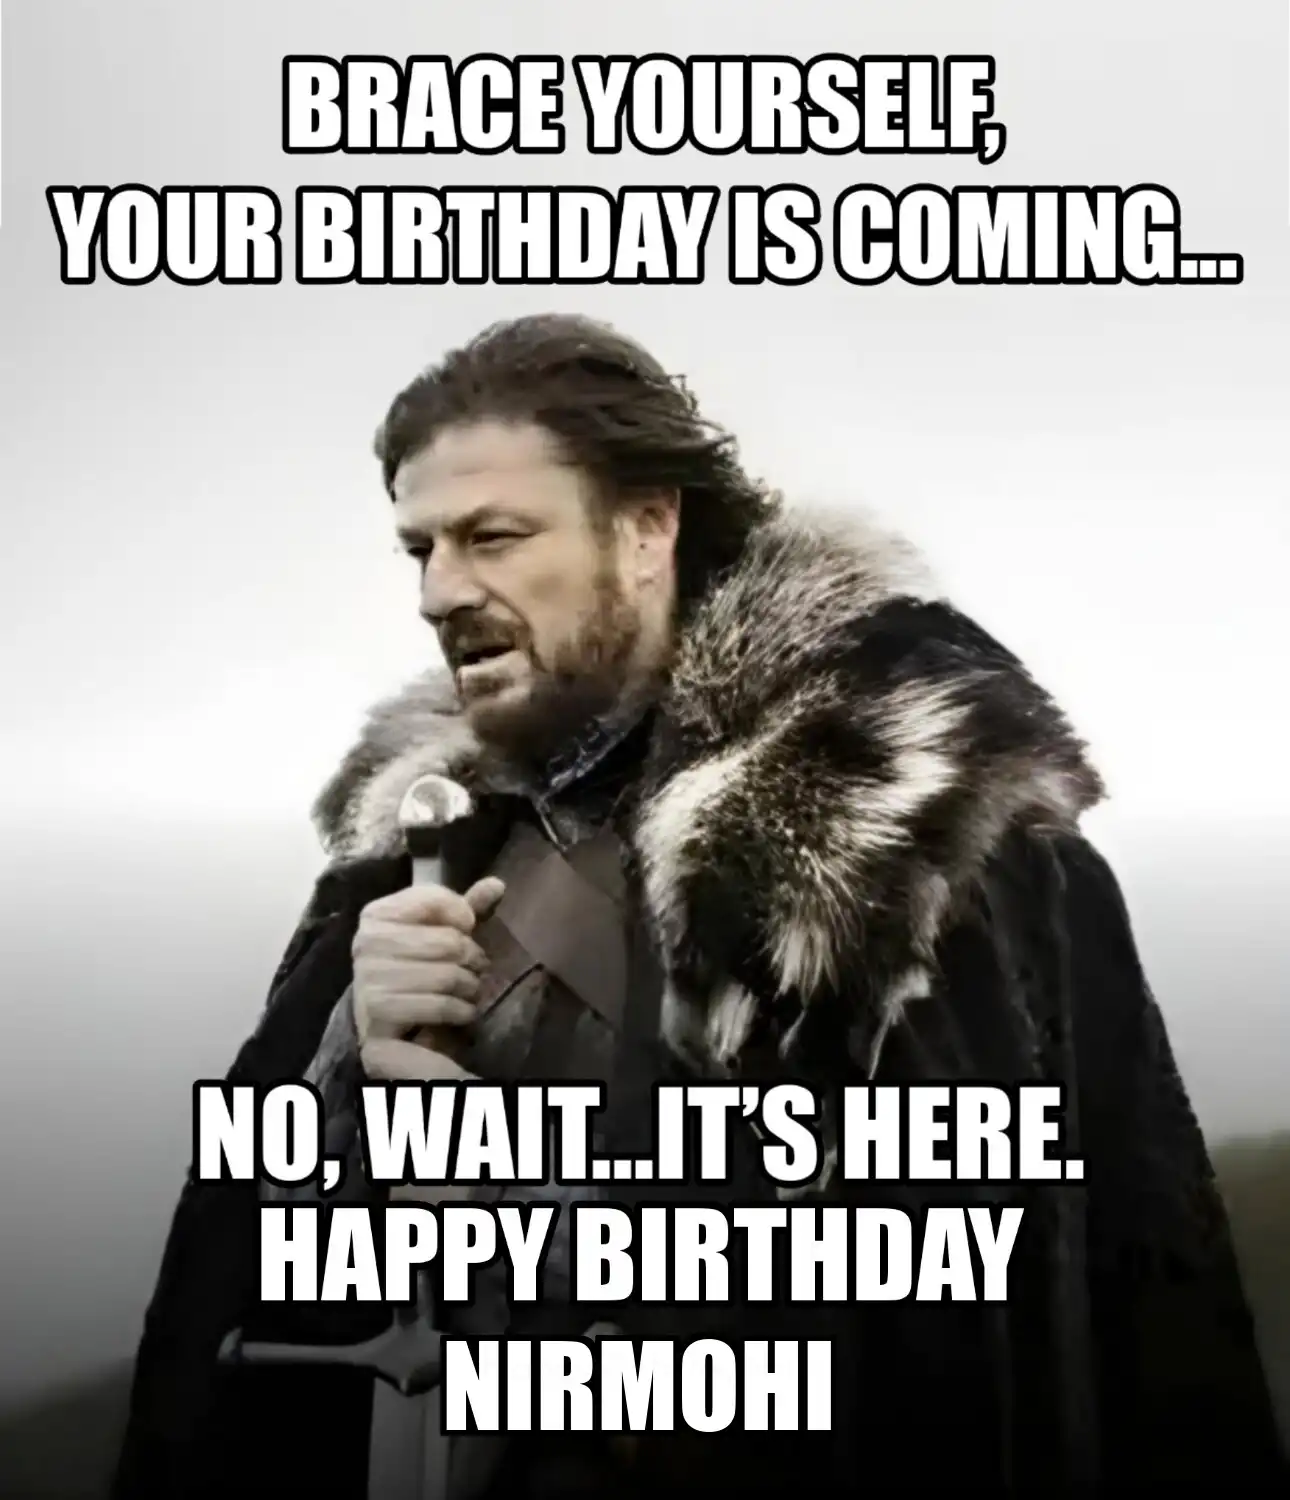 Happy Birthday Nirmohi Brace Yourself Your Birthday Is Coming Meme